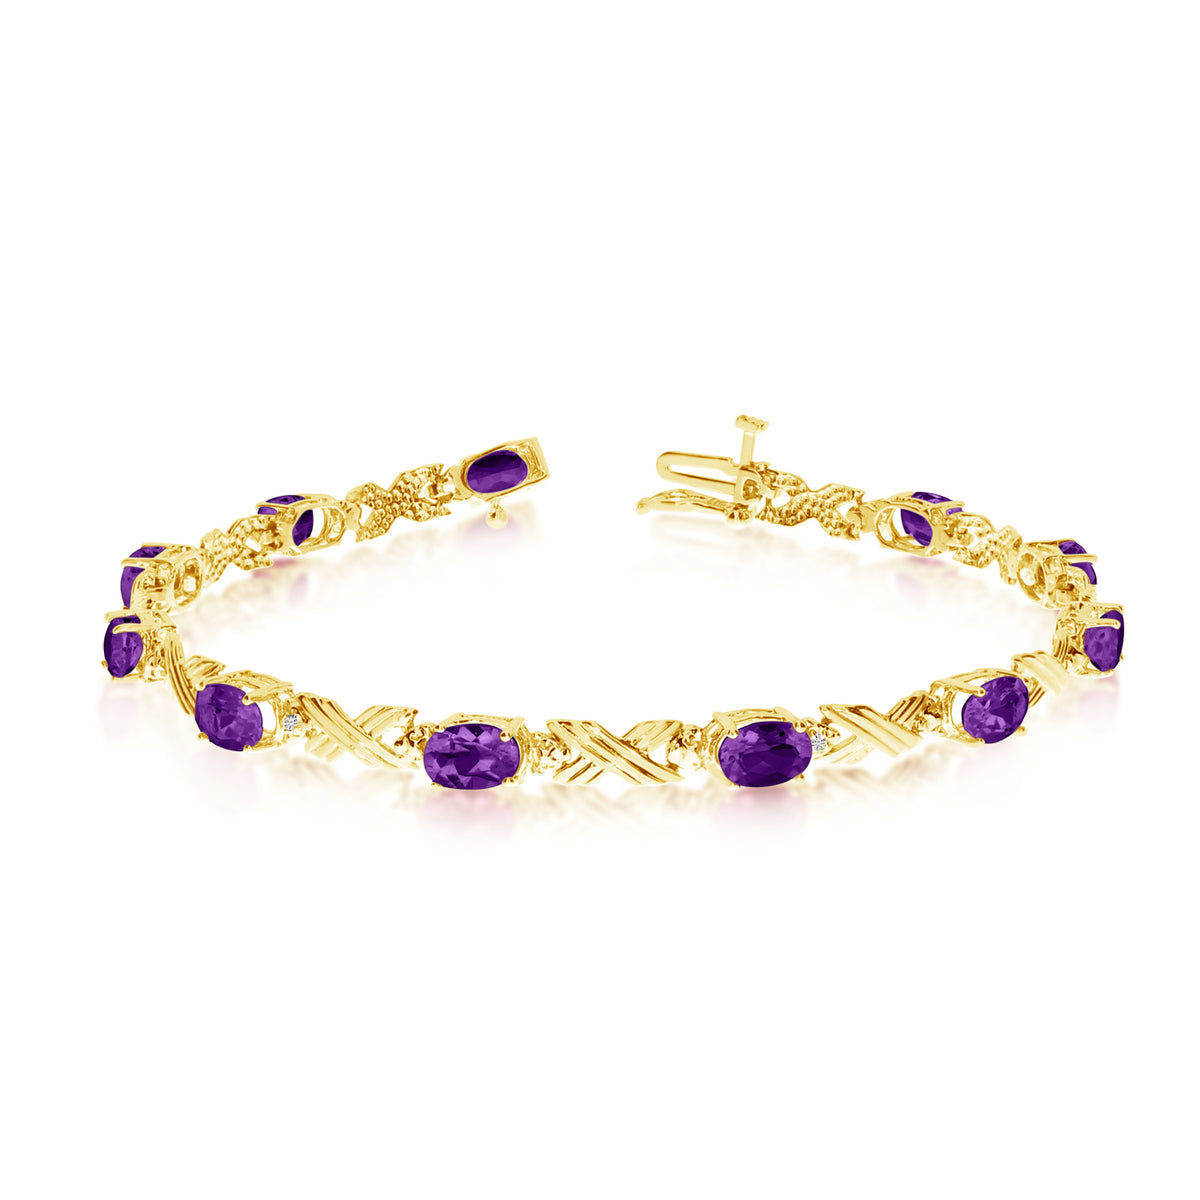 10K Yellow Gold Oval Amethyst Stones And Diamonds Tennis Bracelet, 7" fine designer jewelry for men and women